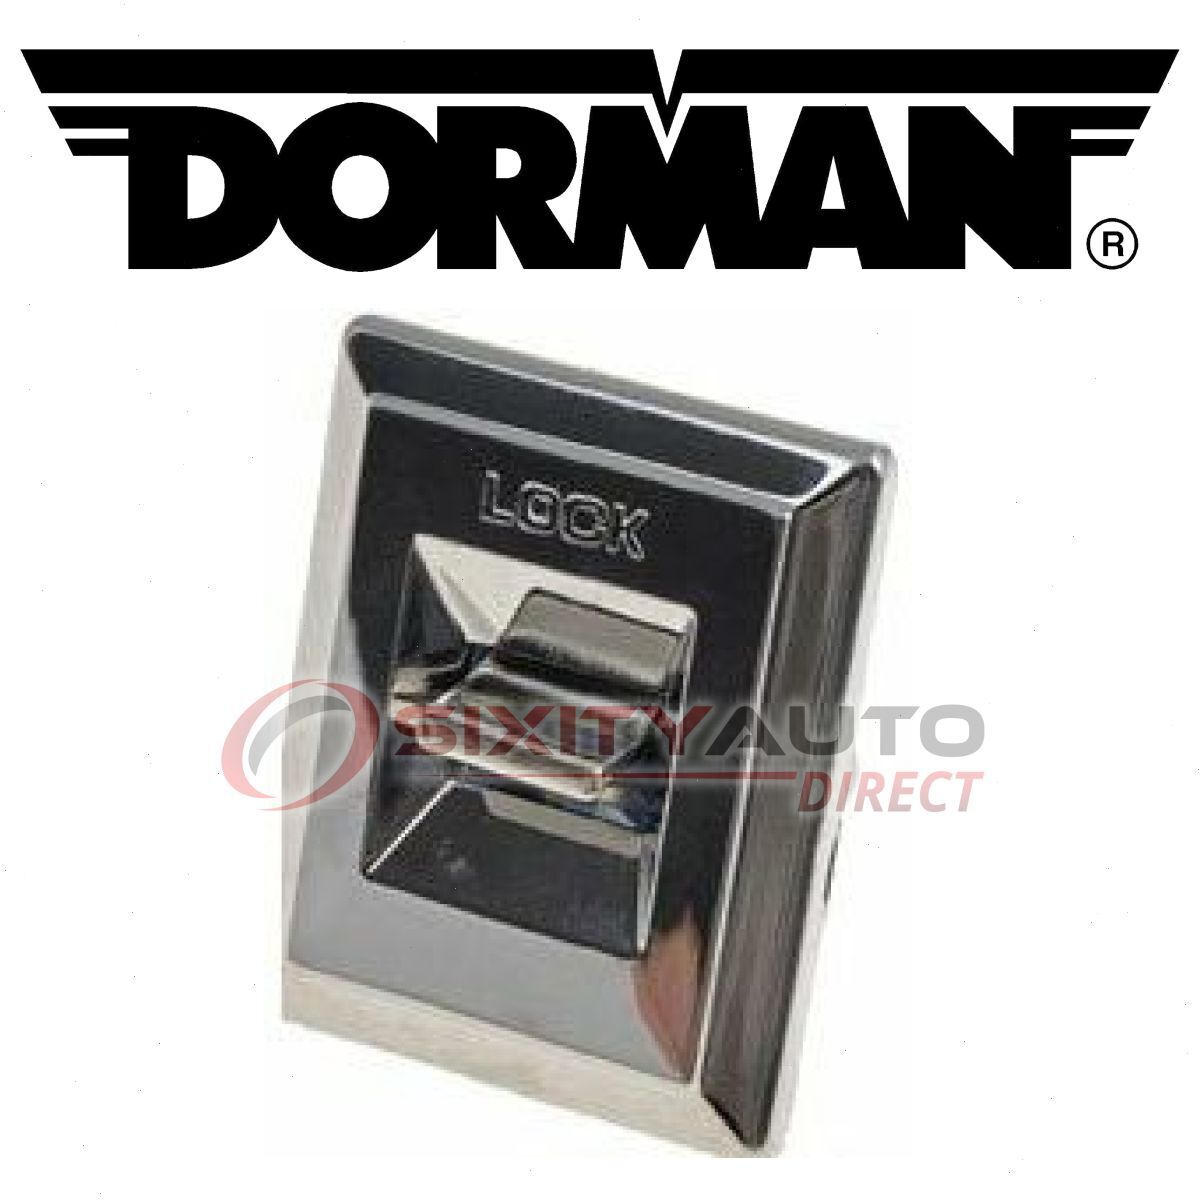 Dorman Front Left Door Lock Switch for 1978-1988 Oldsmobile Cutlass Supreme mo